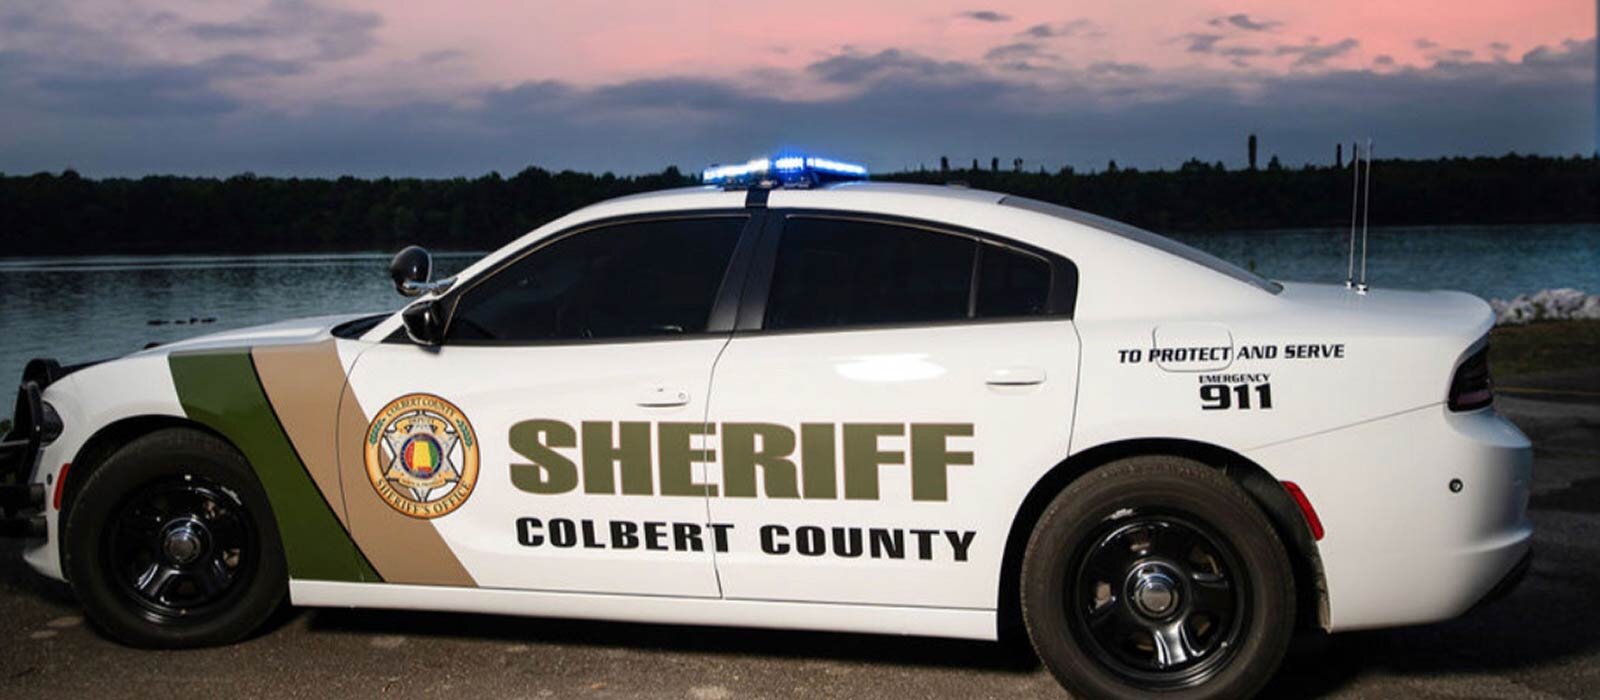 Colbert County Sheriff Patrol Vehicle